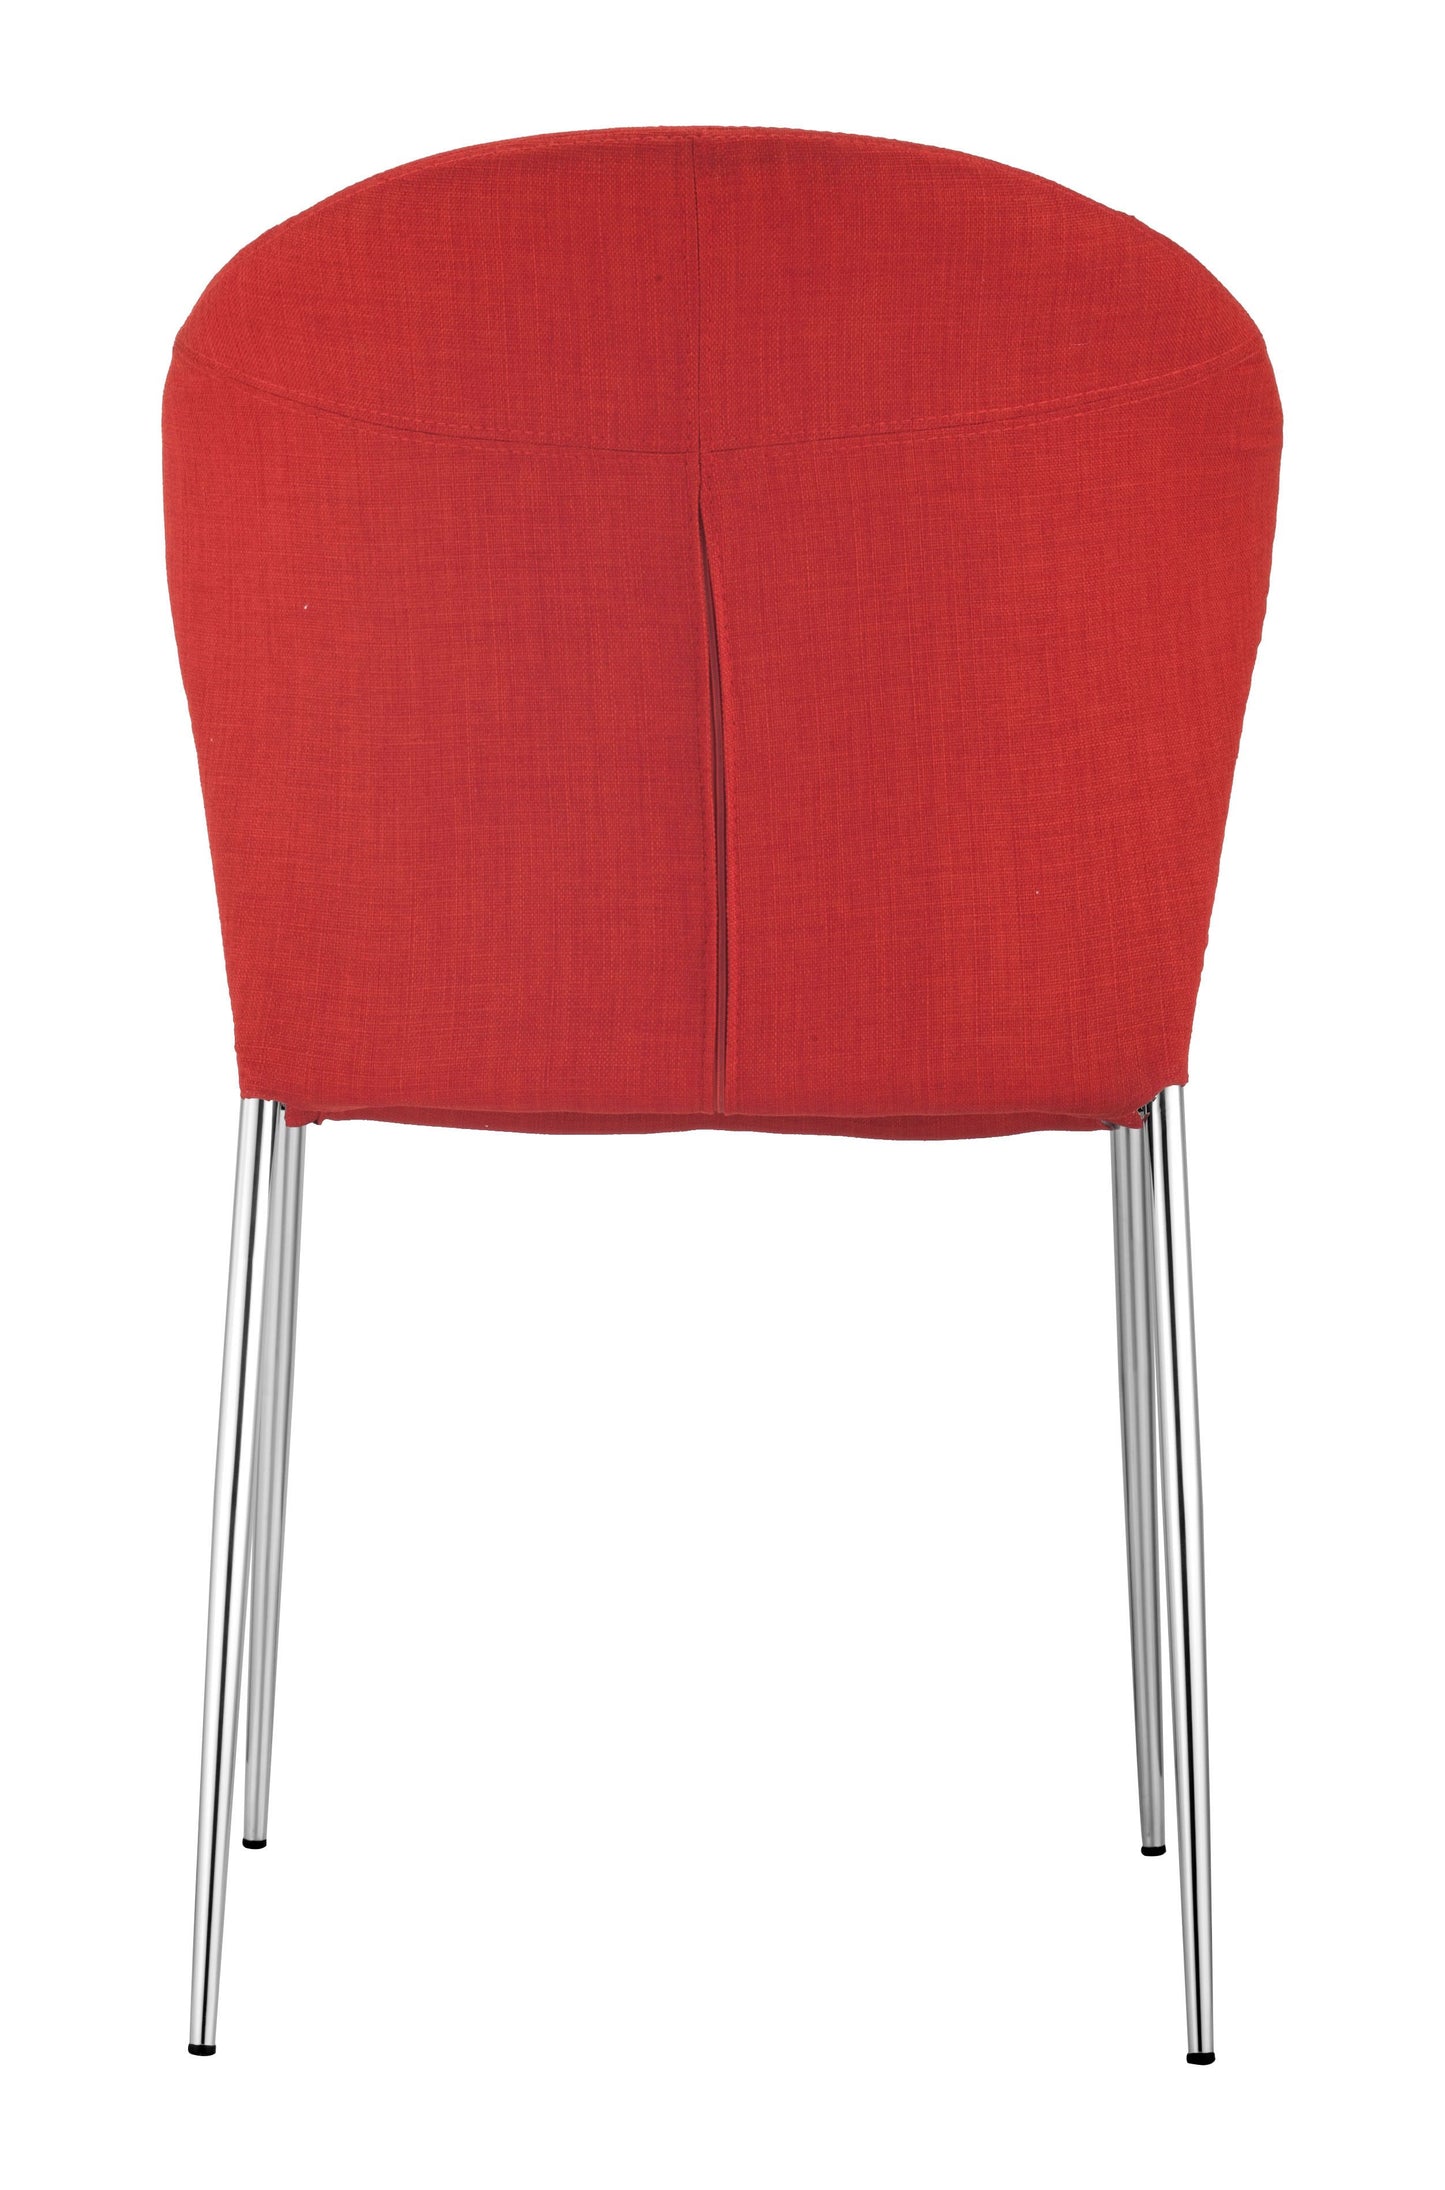 Oulu Dining Chair Tangerine